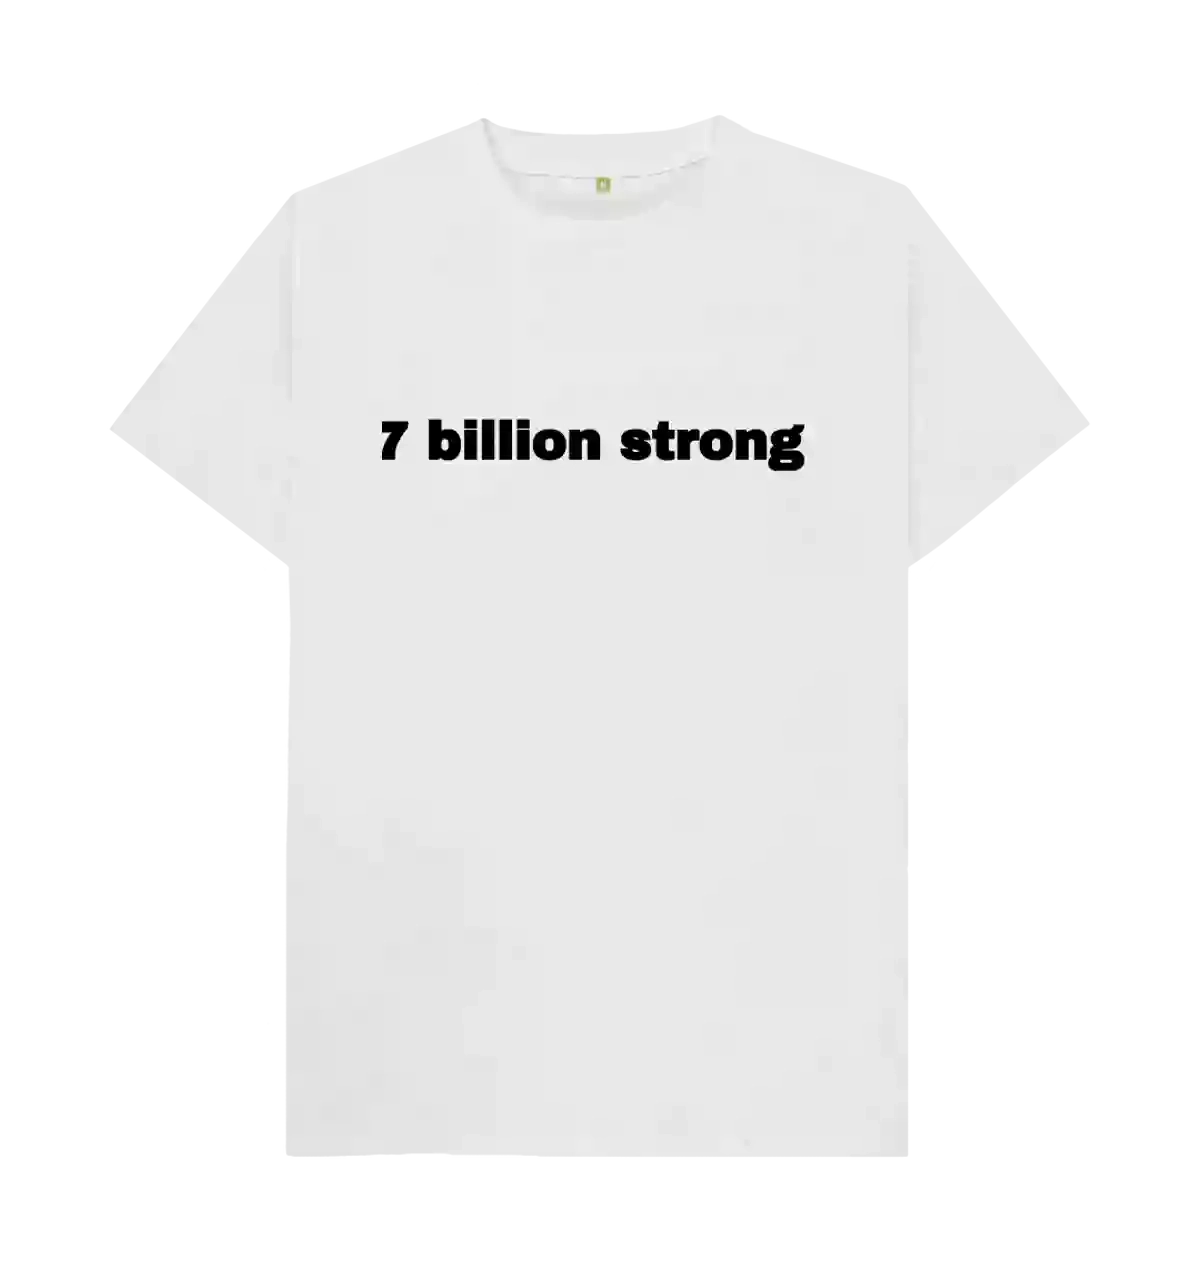 7 billion strong